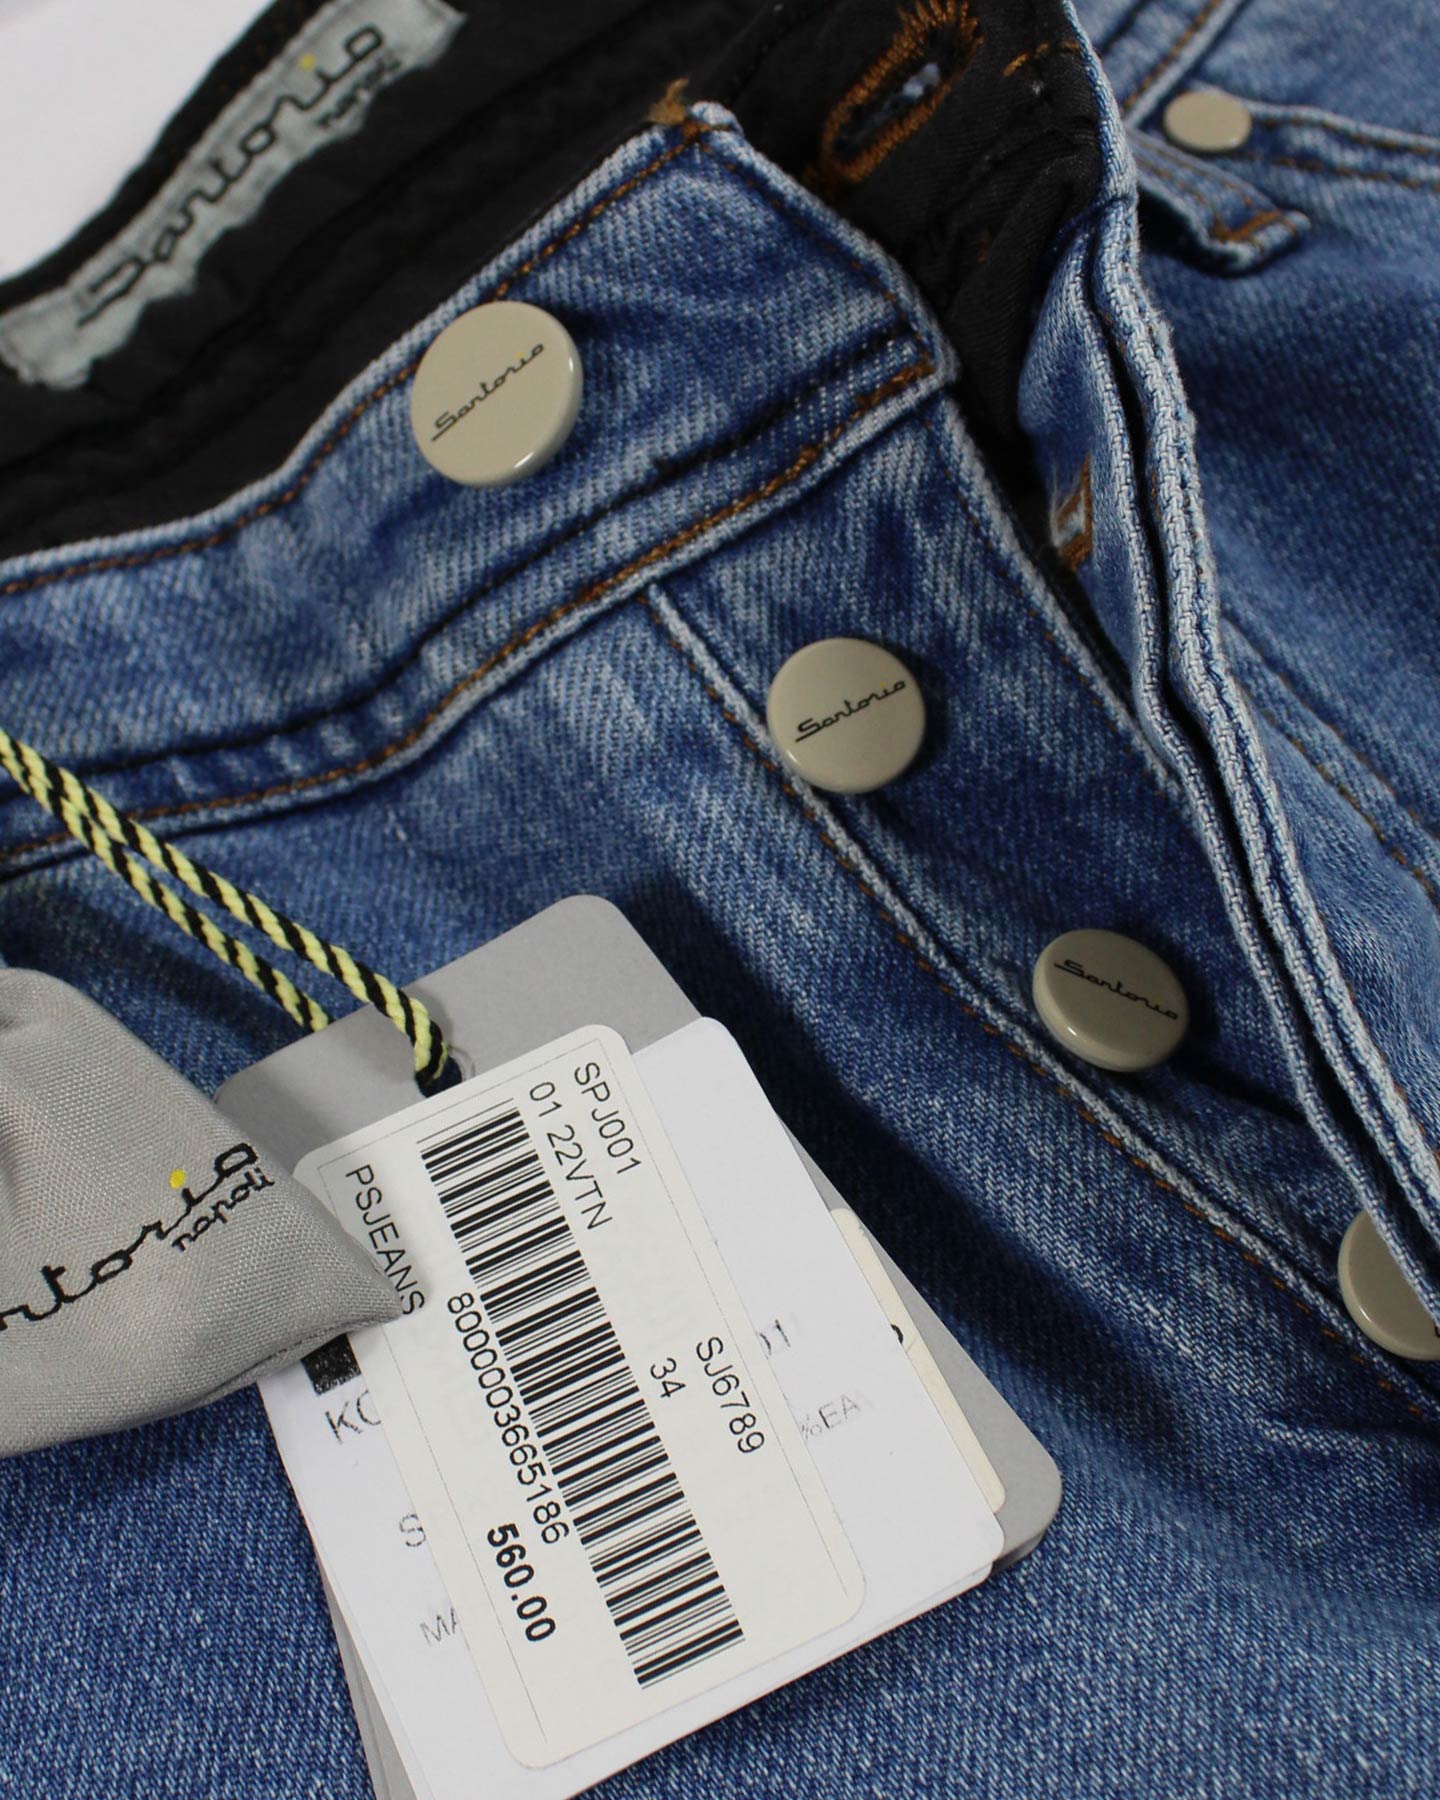 Sartorio Napoli Jeans Blue Button 34 SALE - Tie Deals